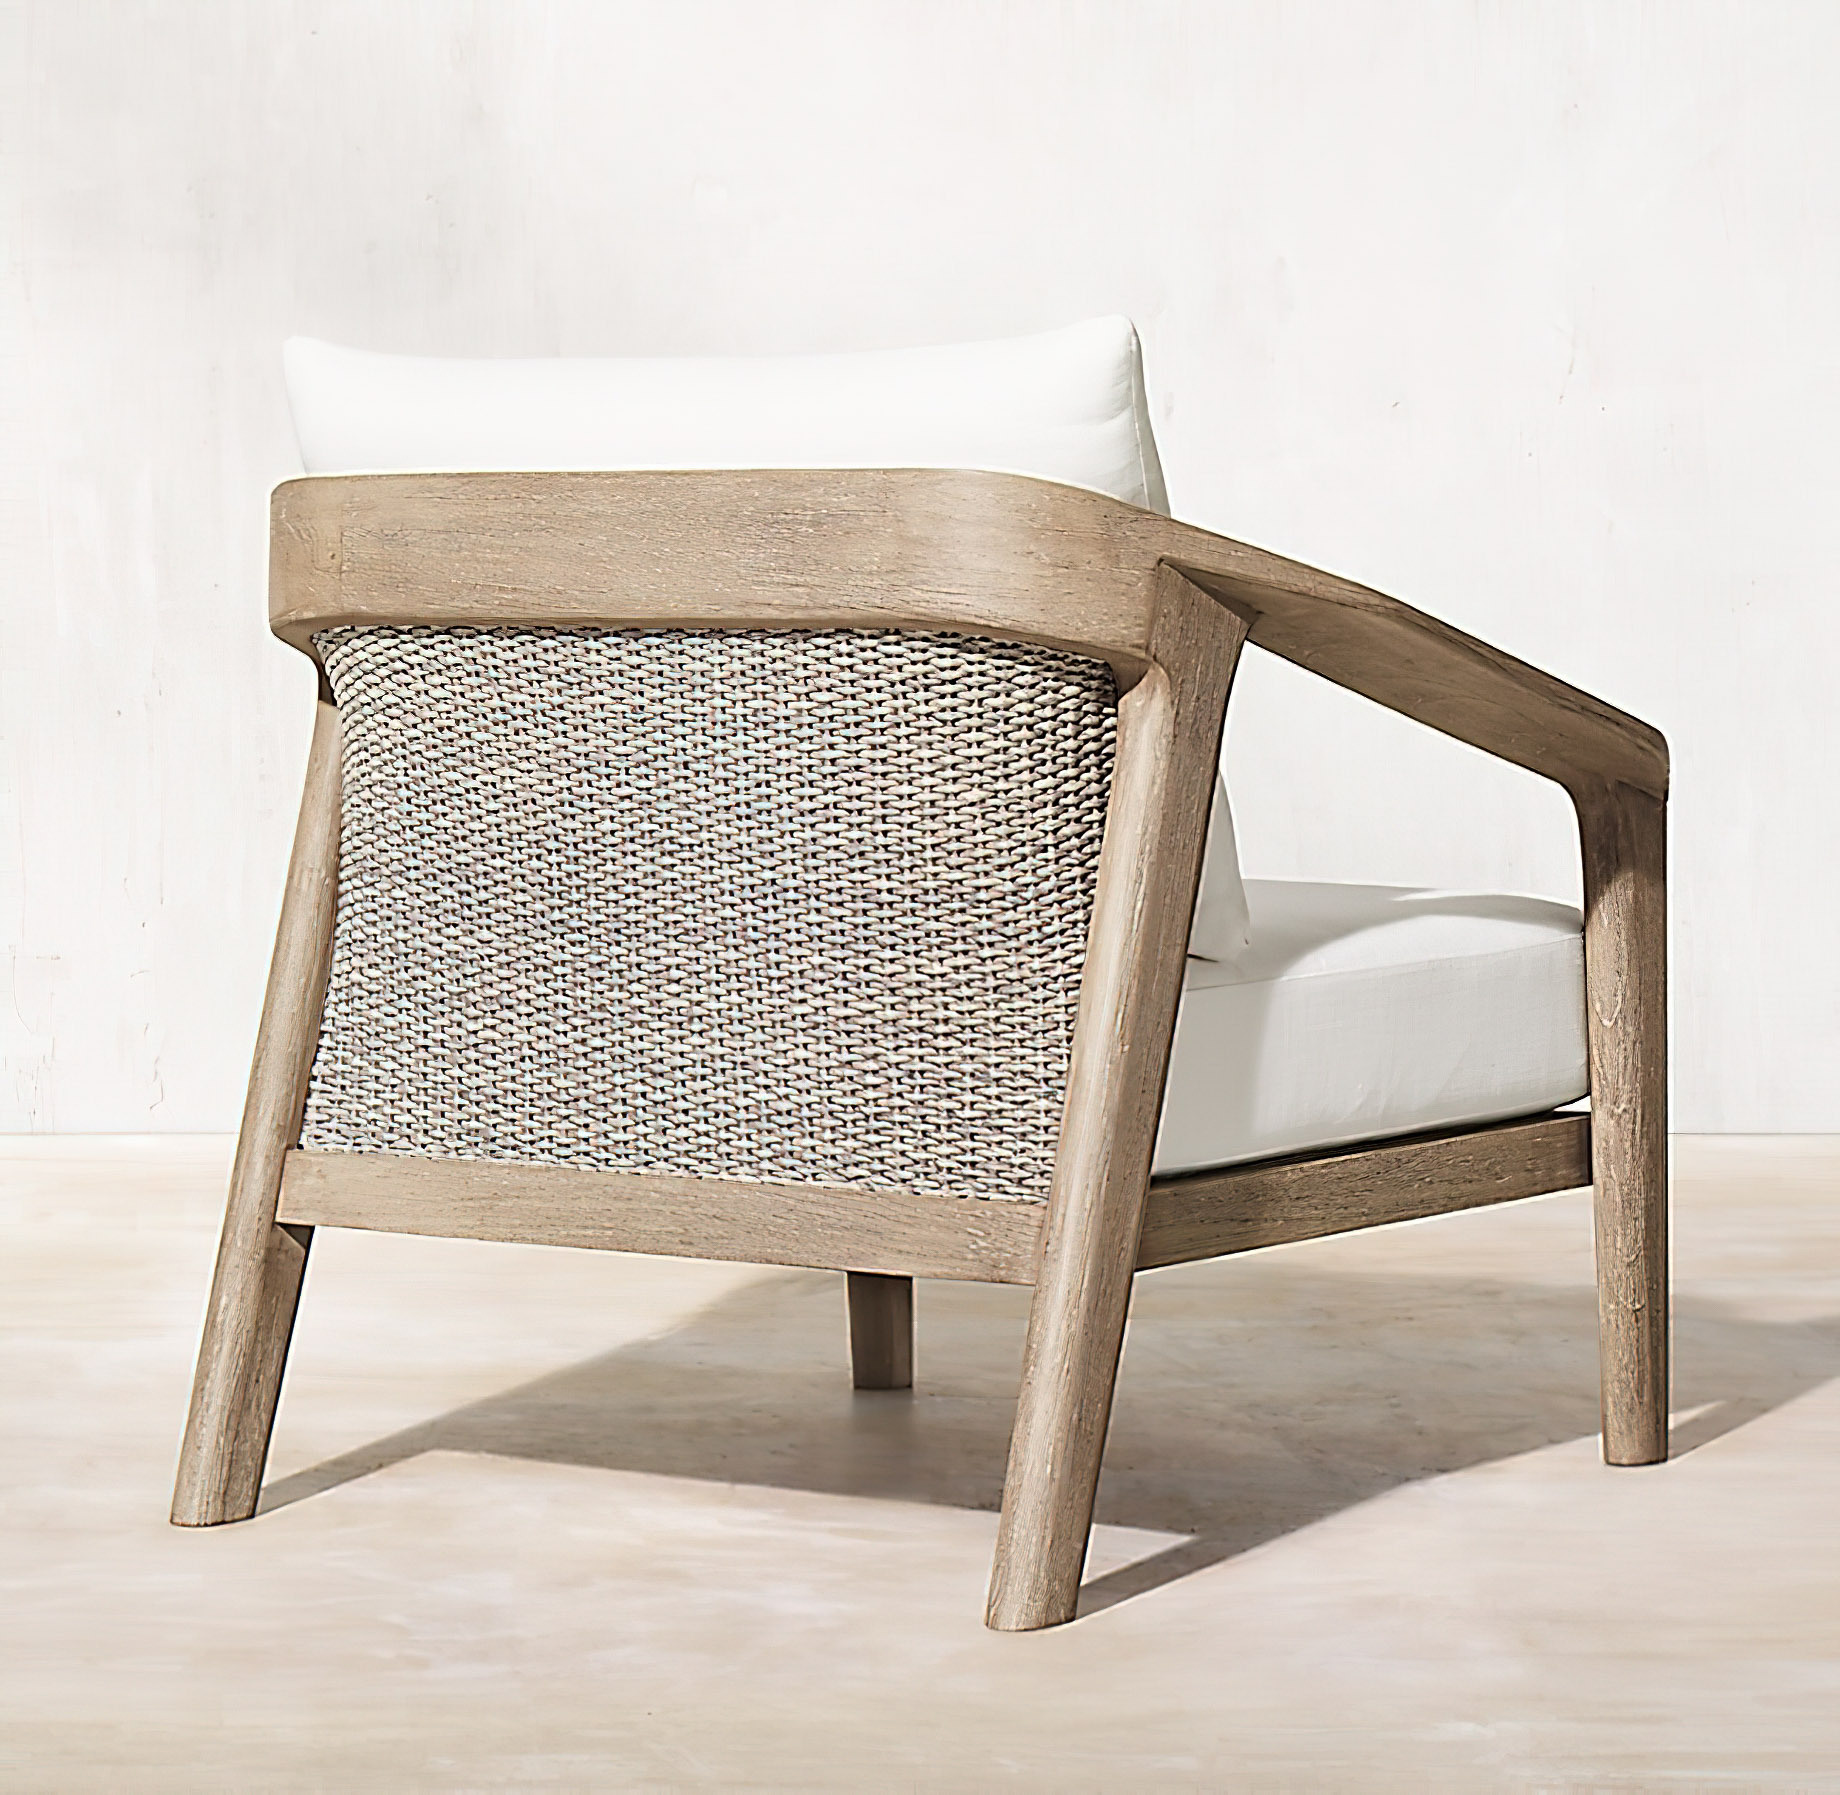 Malta Teak Collection Outdoor Furniture Design for RH – Ramon Esteve – Malta Teak Lounge Chair